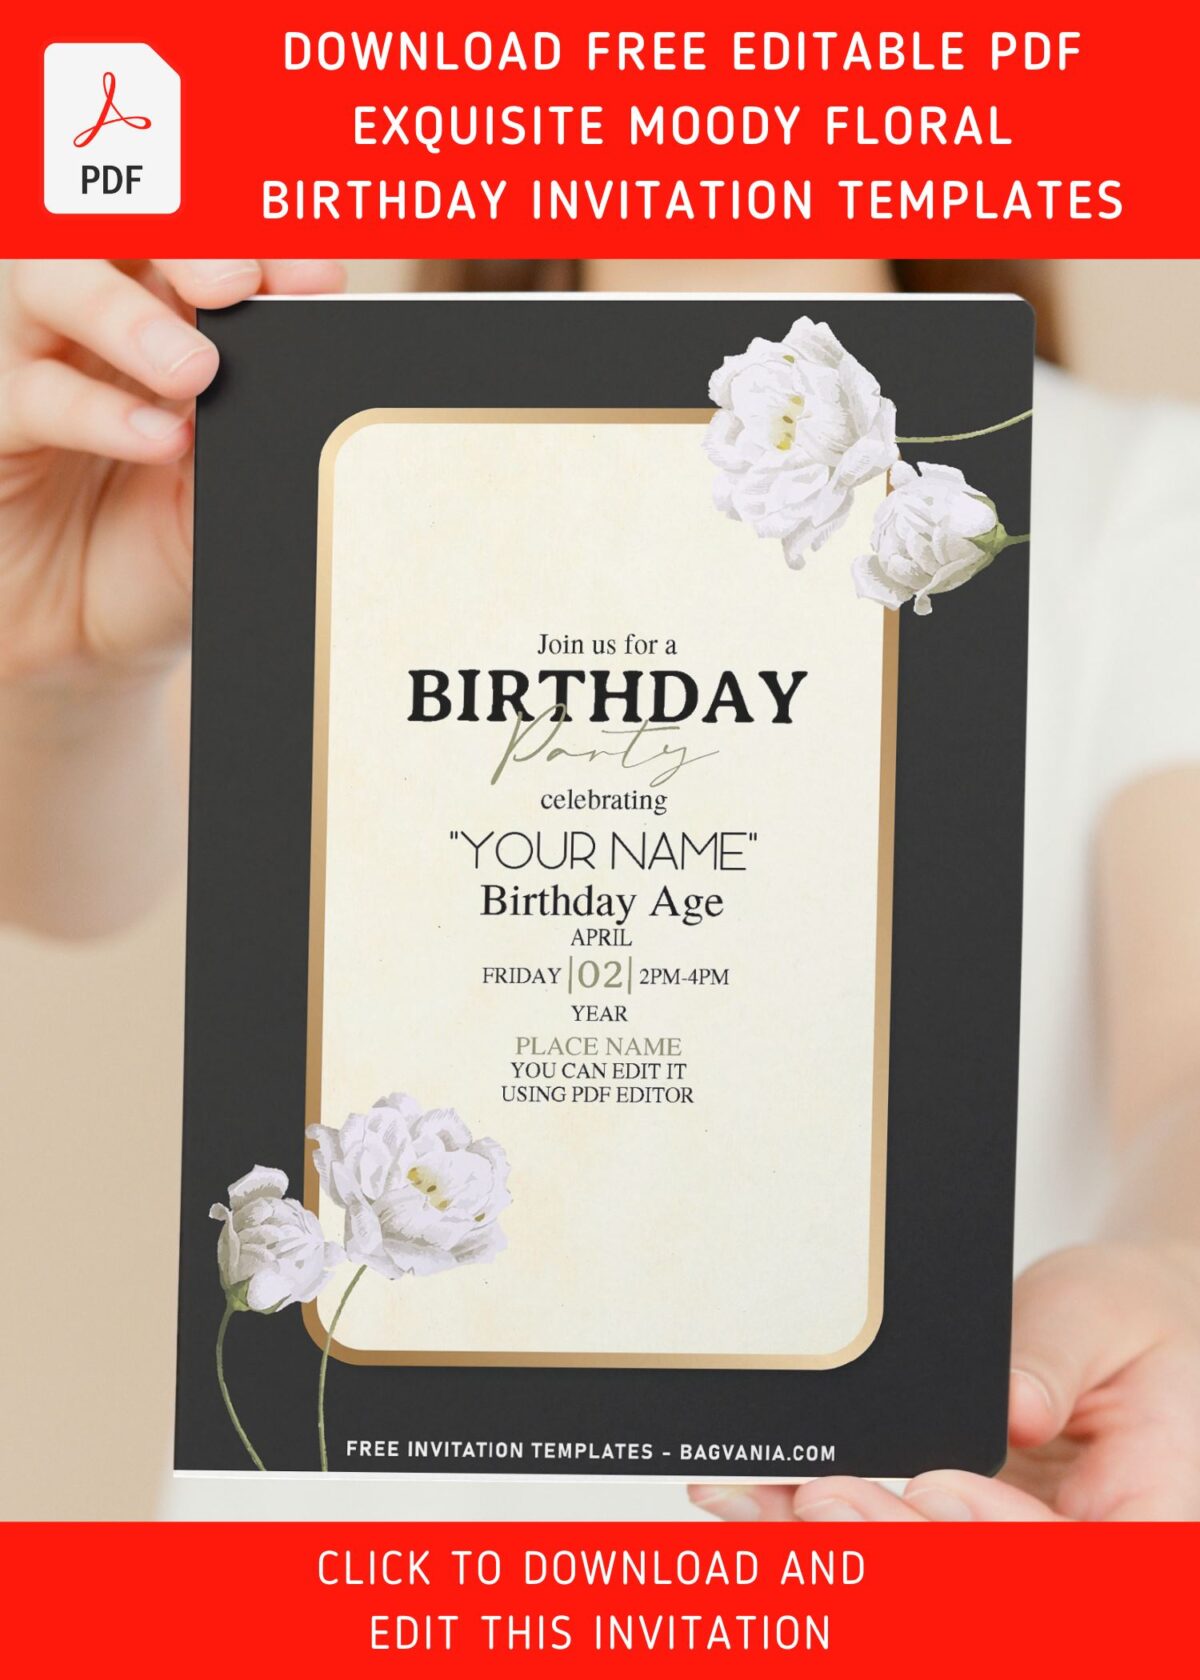 (Free Editable PDF) Stylish & Captivating Moody Floral Birthday Invitation Templates with elegant and minimalist gold frame